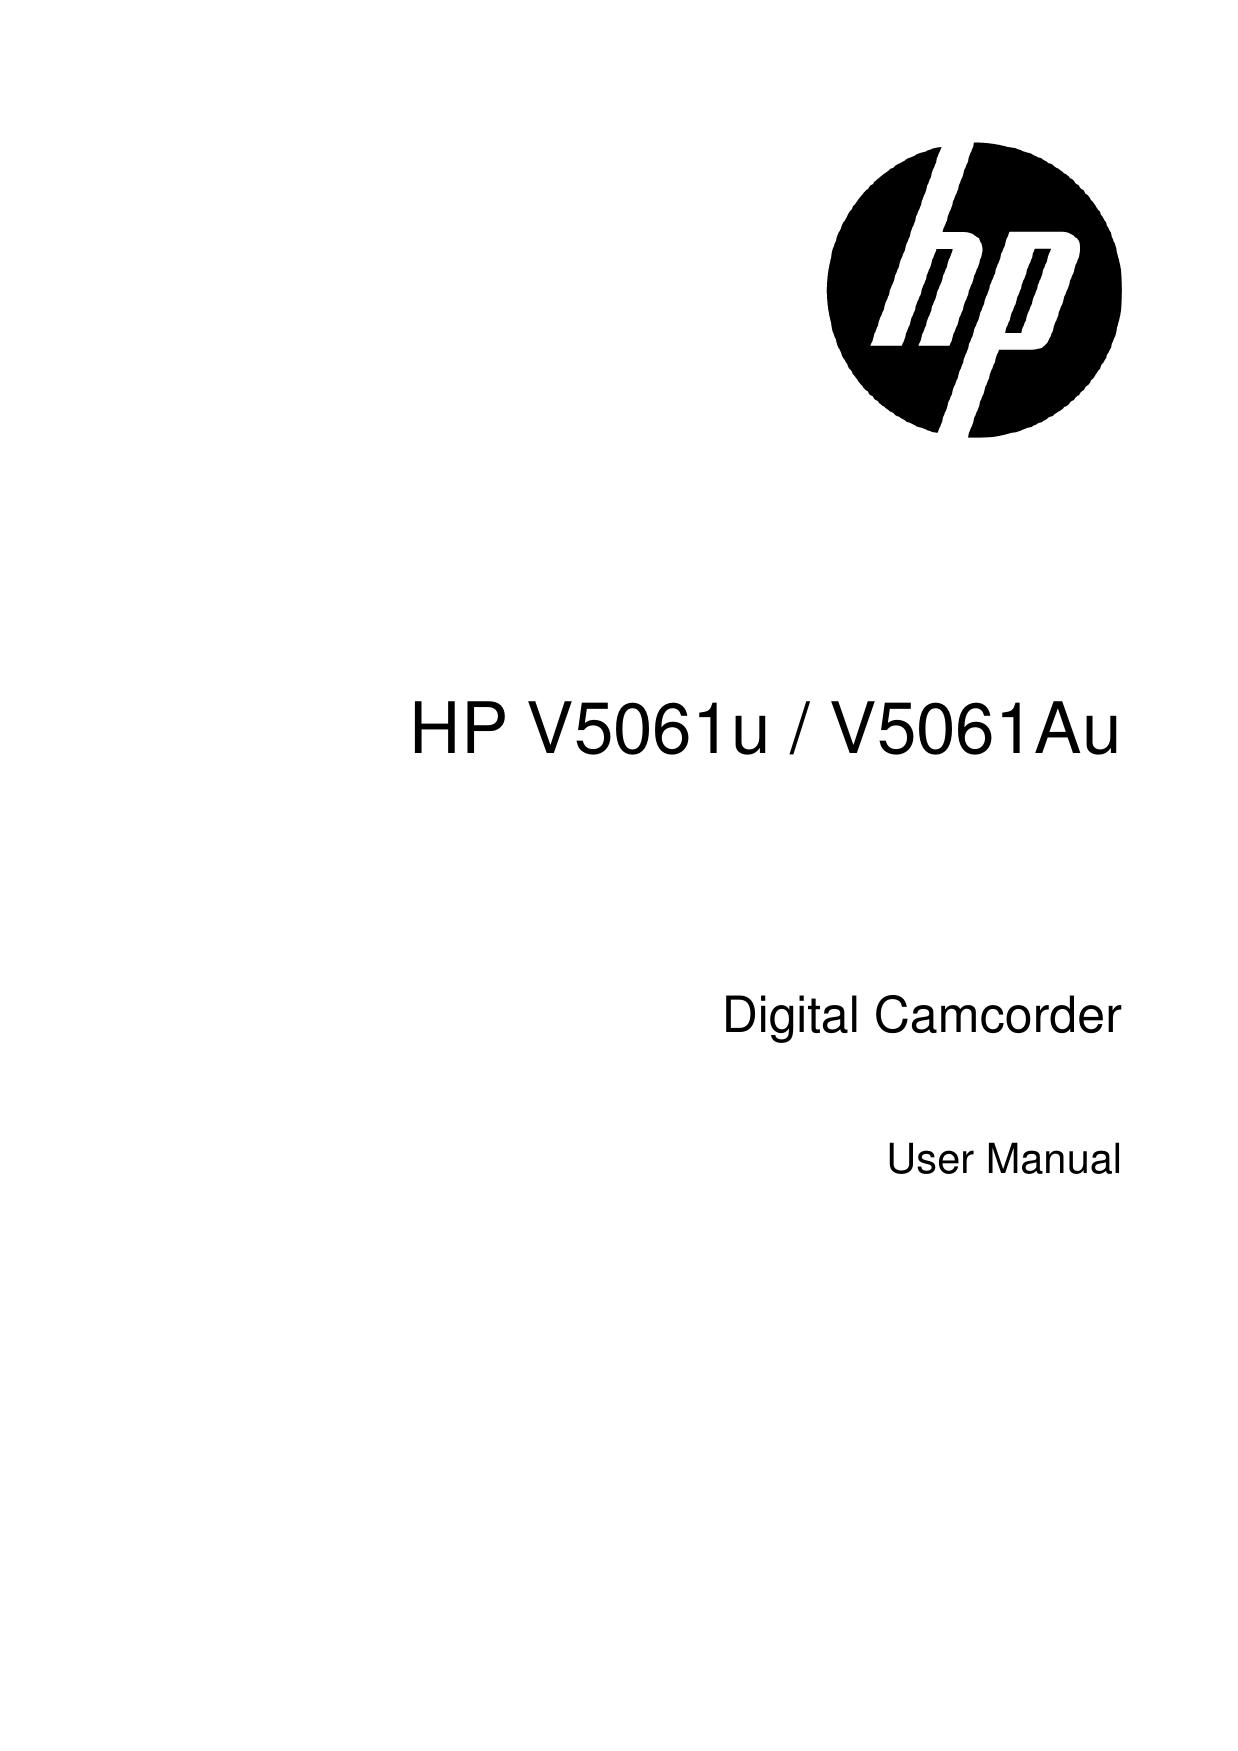 HP (Hewlett-Packard) V506AU Camcorder User Manual